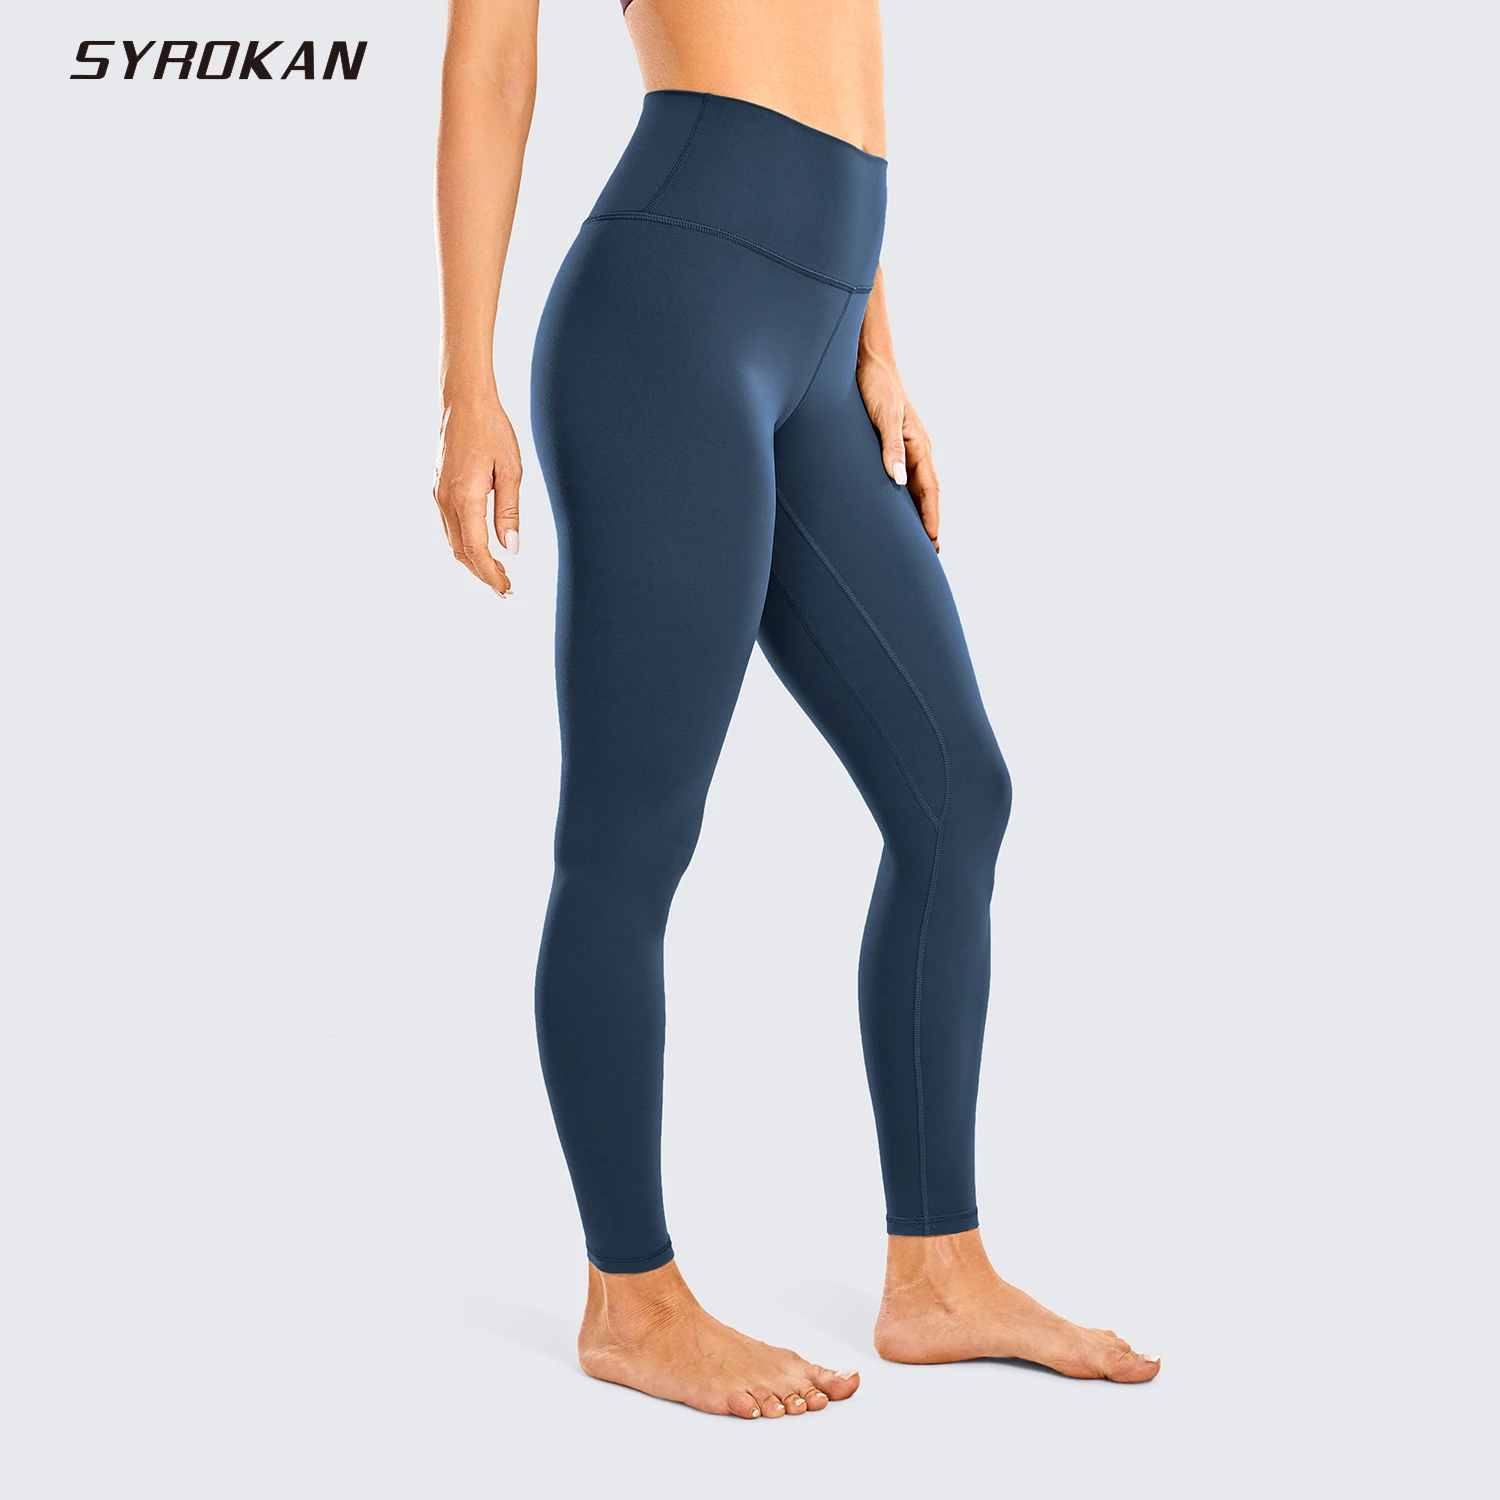 

SYROKAN Women's High Waisted Full-Length Yoga Leggings Naked Feeling Soft Workout Tights Running Pants -28 Inches